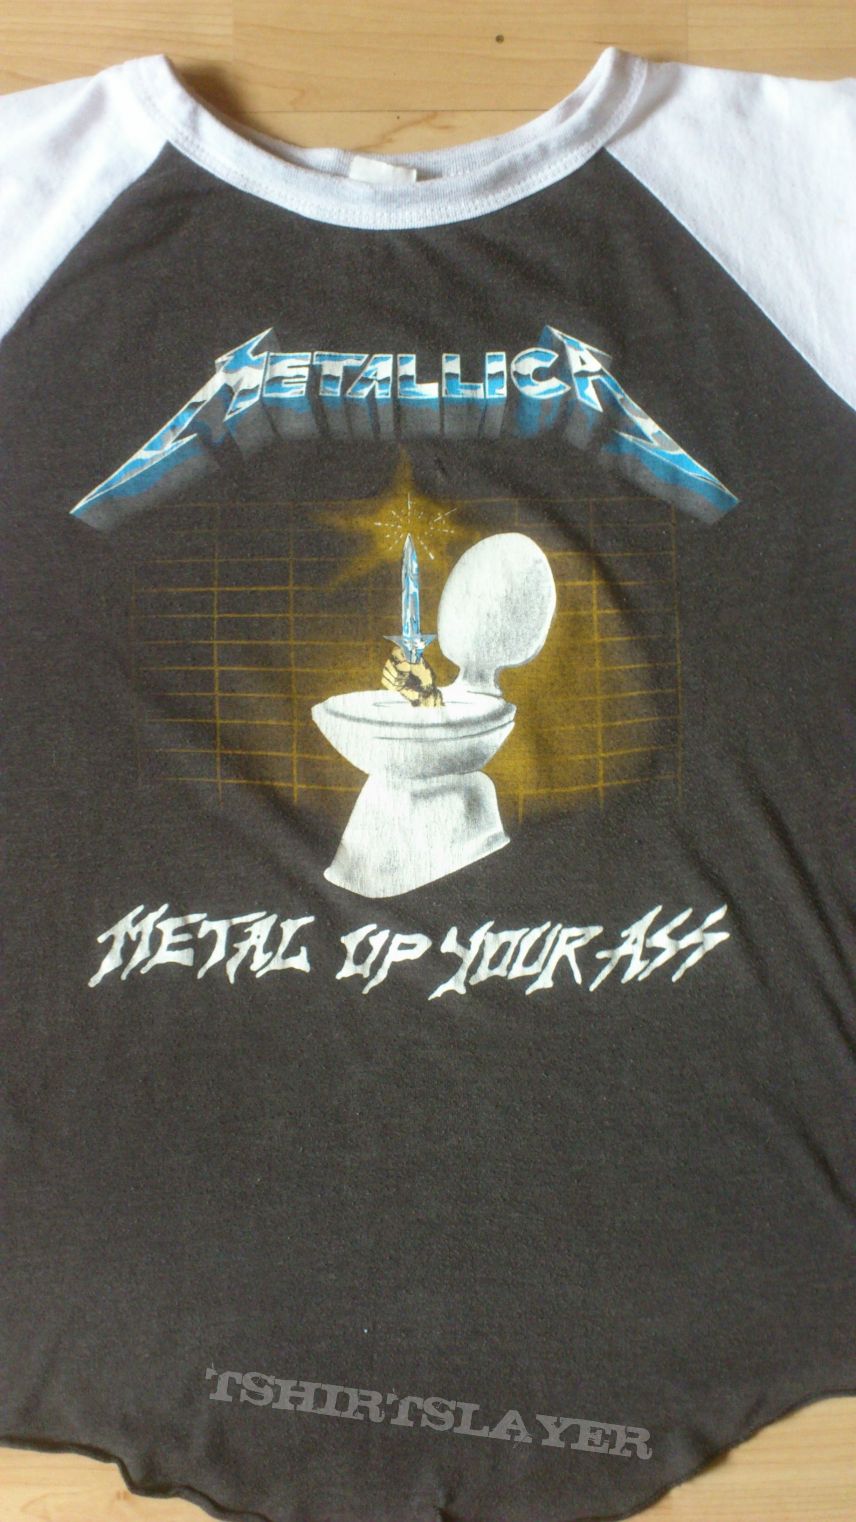 Metallica Metal up your Ass - Baseball jersey